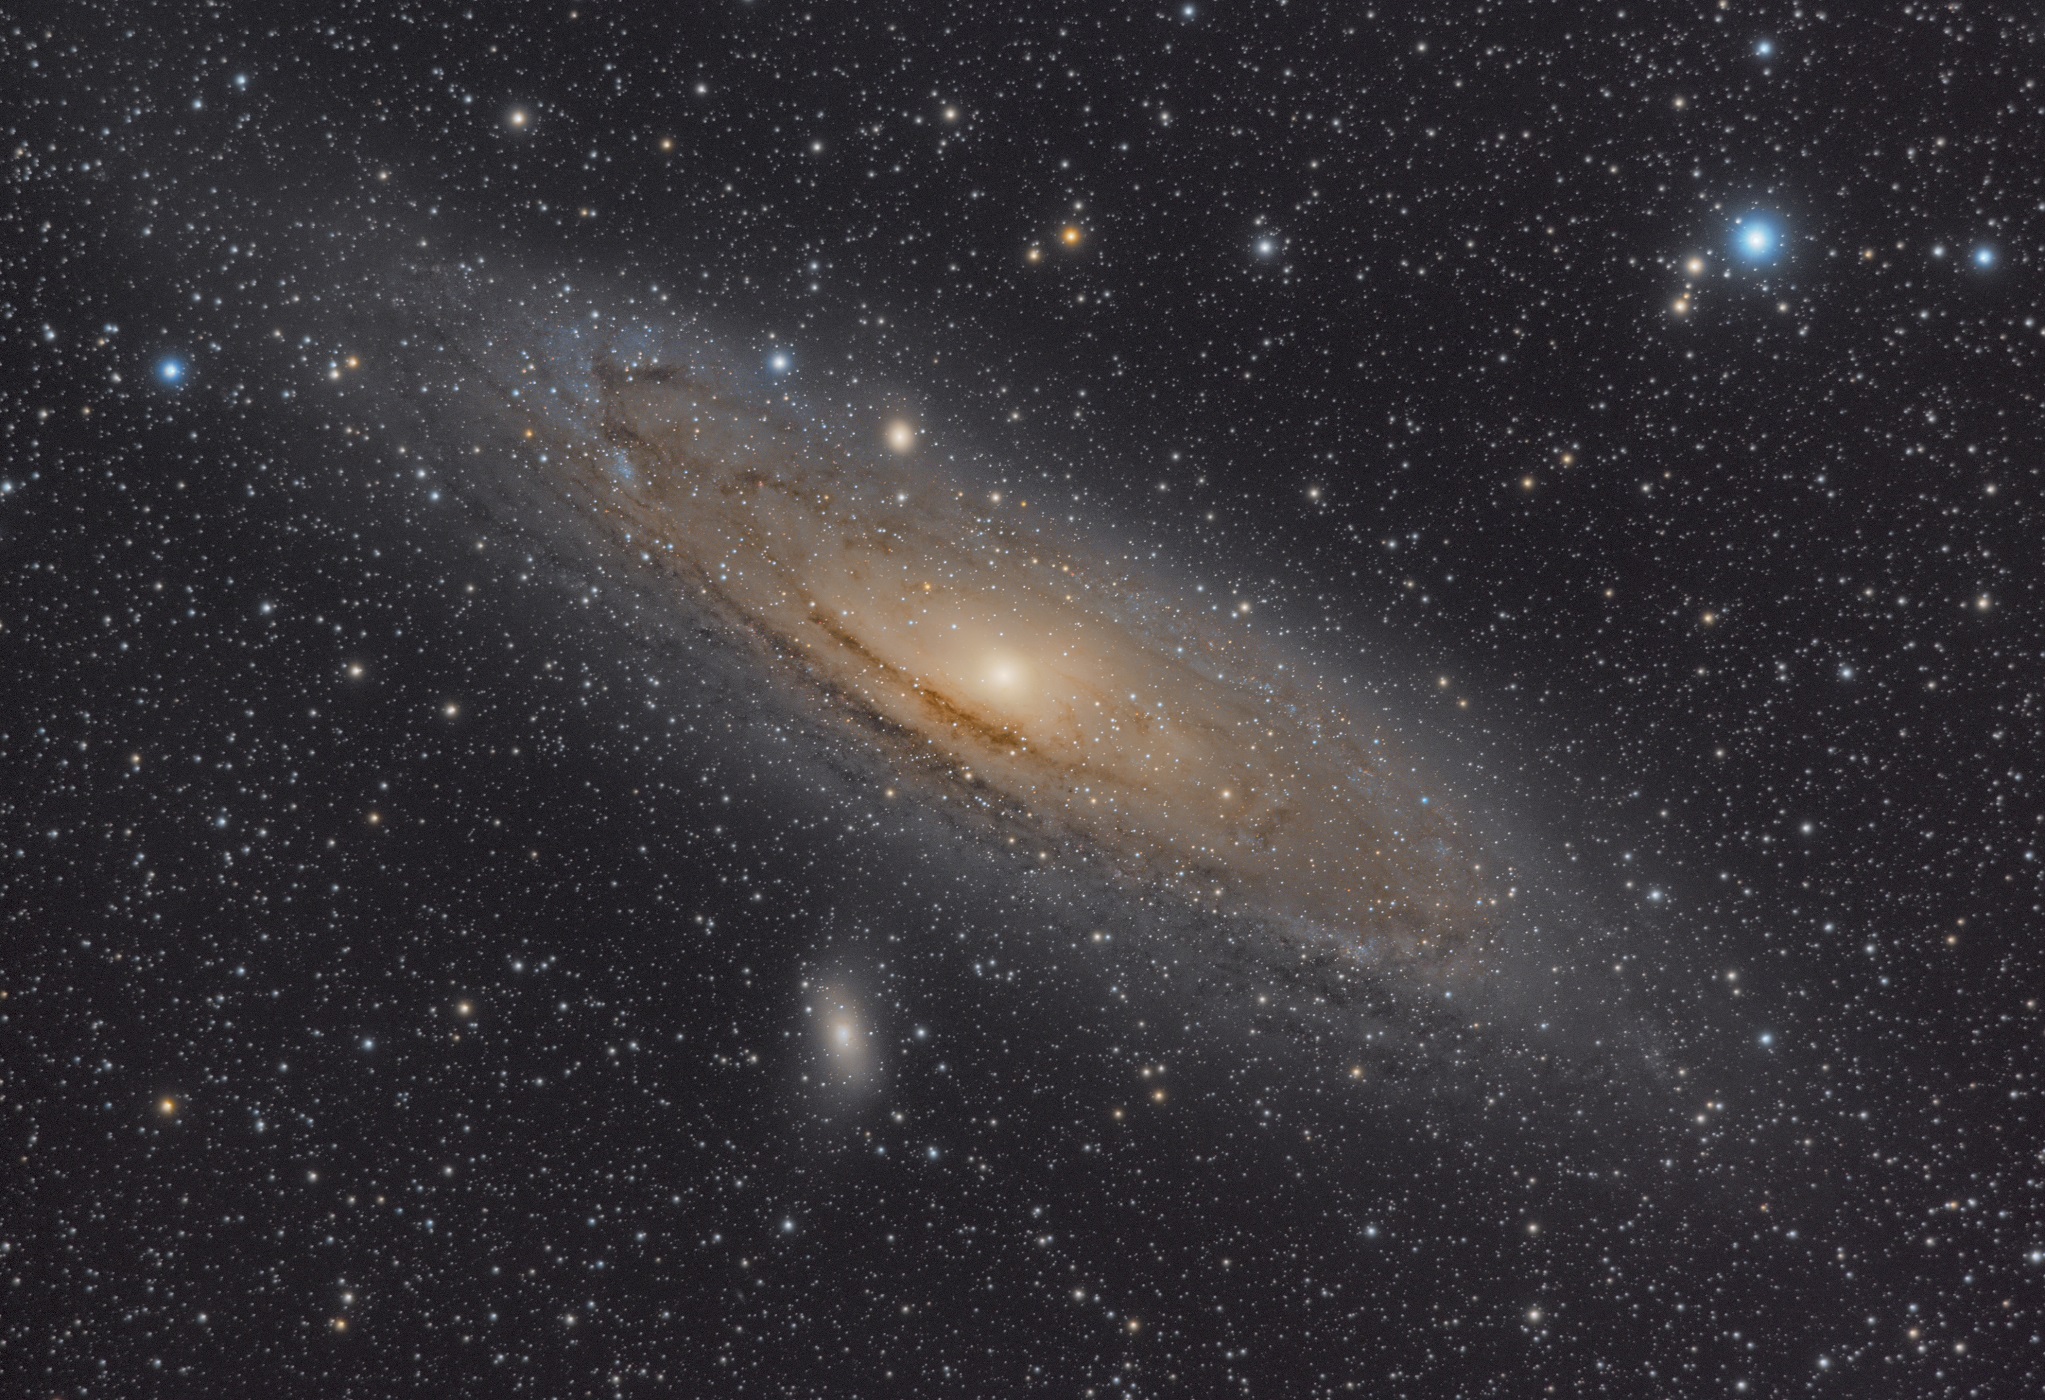 M31 v Andromedě